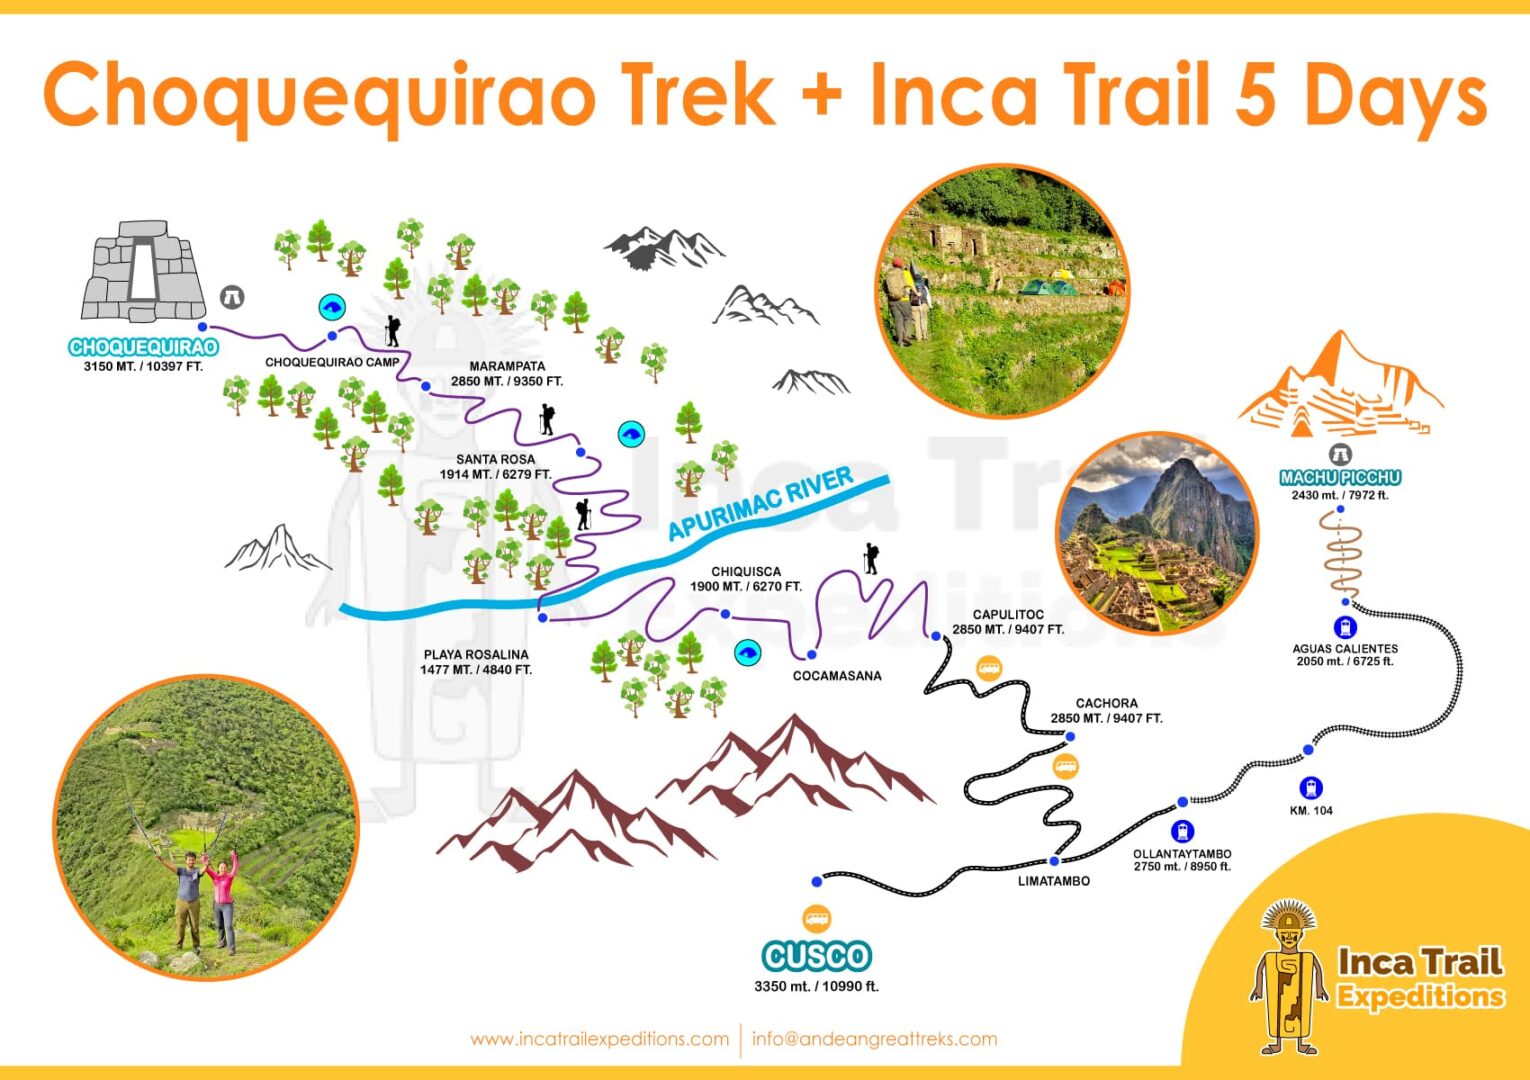 CHOQUEQUIRAO-TREK-INCA-TRAIL-5-DAYS-BY-INCA-TRAIL-EXPEDITIONS